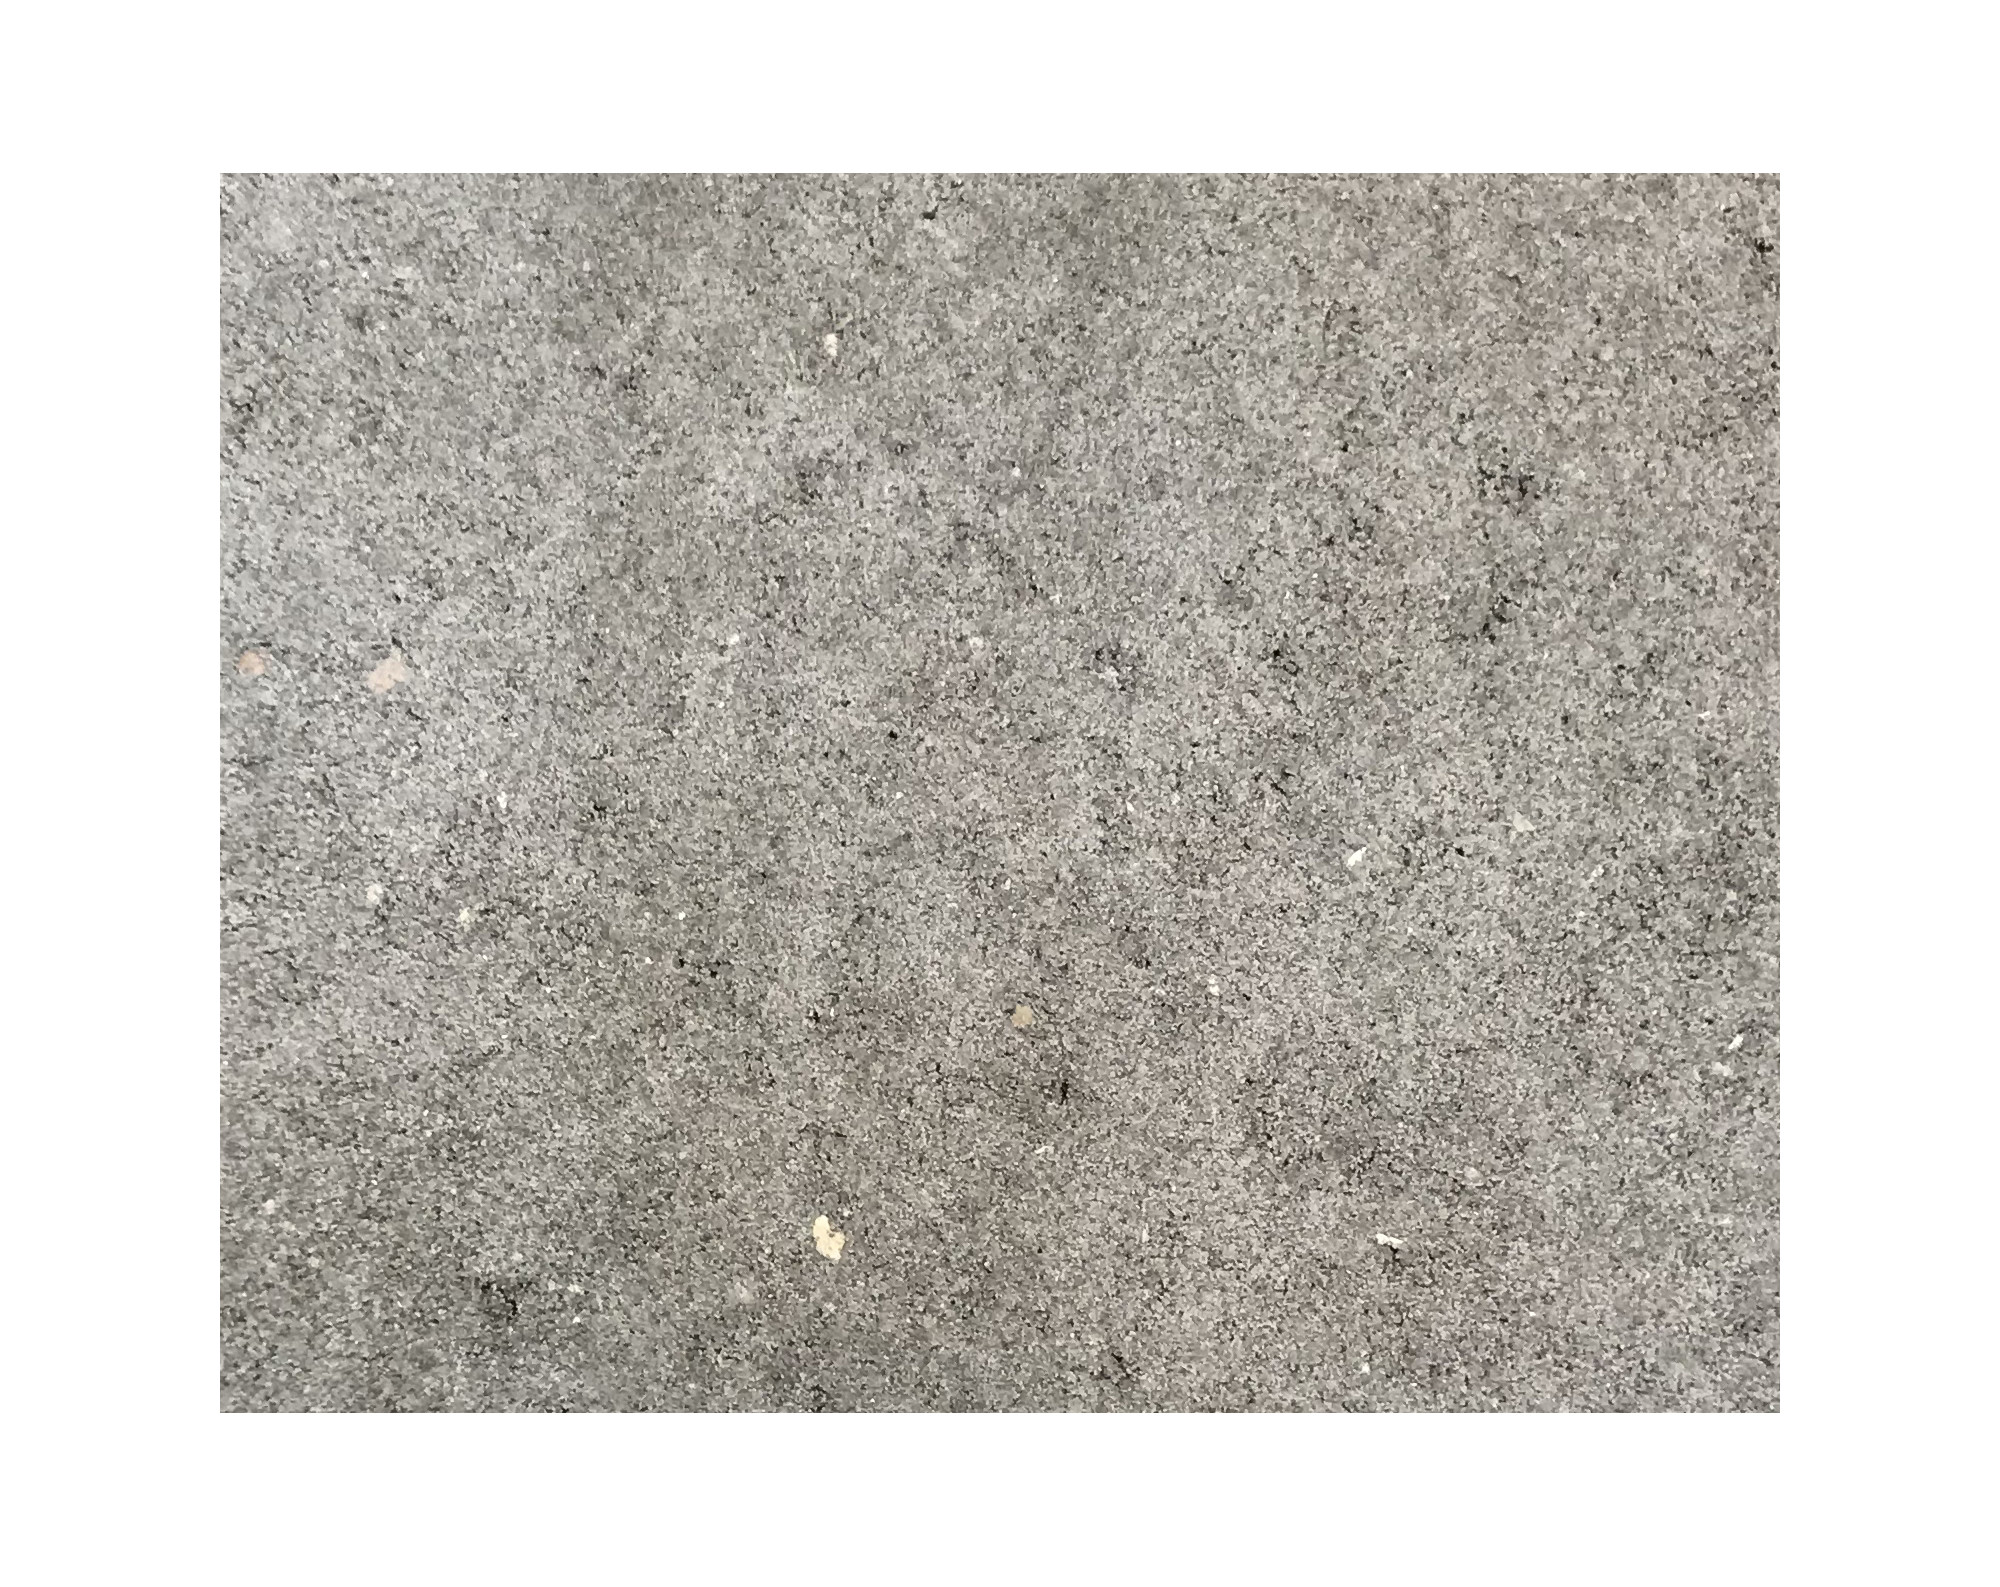 Harmo roc nevadaset, rustica-serie, 8-vormig d:4,60mx7,25m, grijs, beton